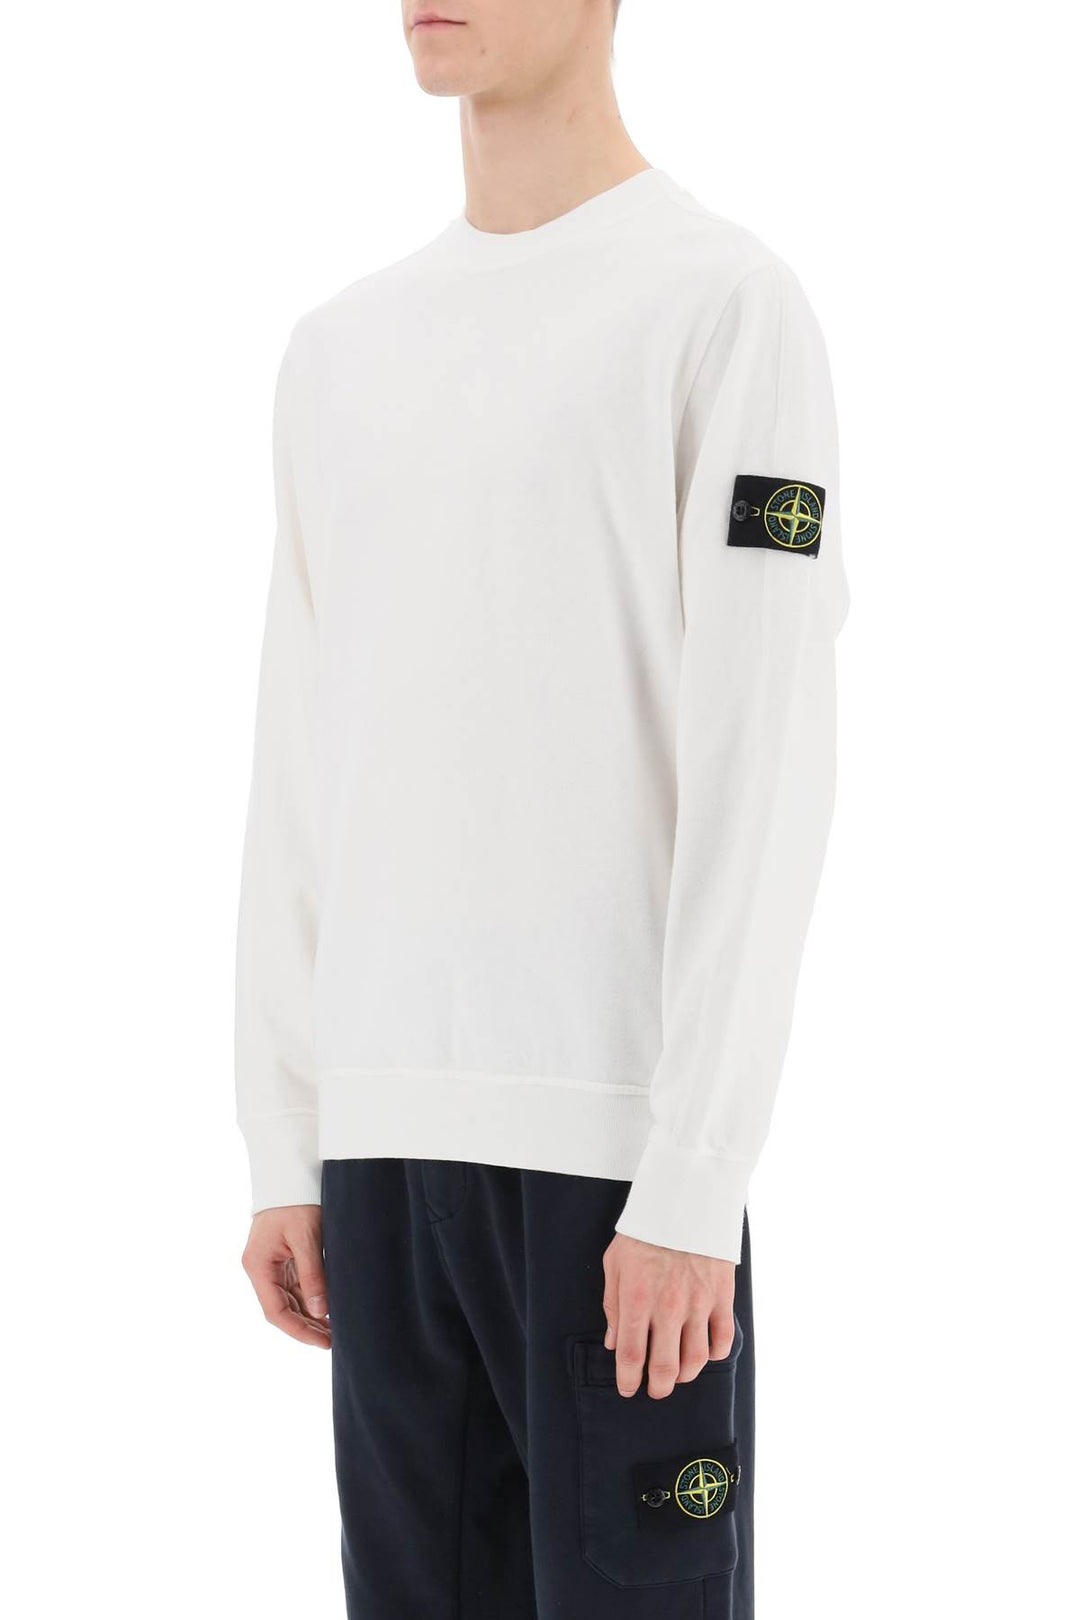 Stone Island Light Sweatshirt With Logo Badge   Bianco